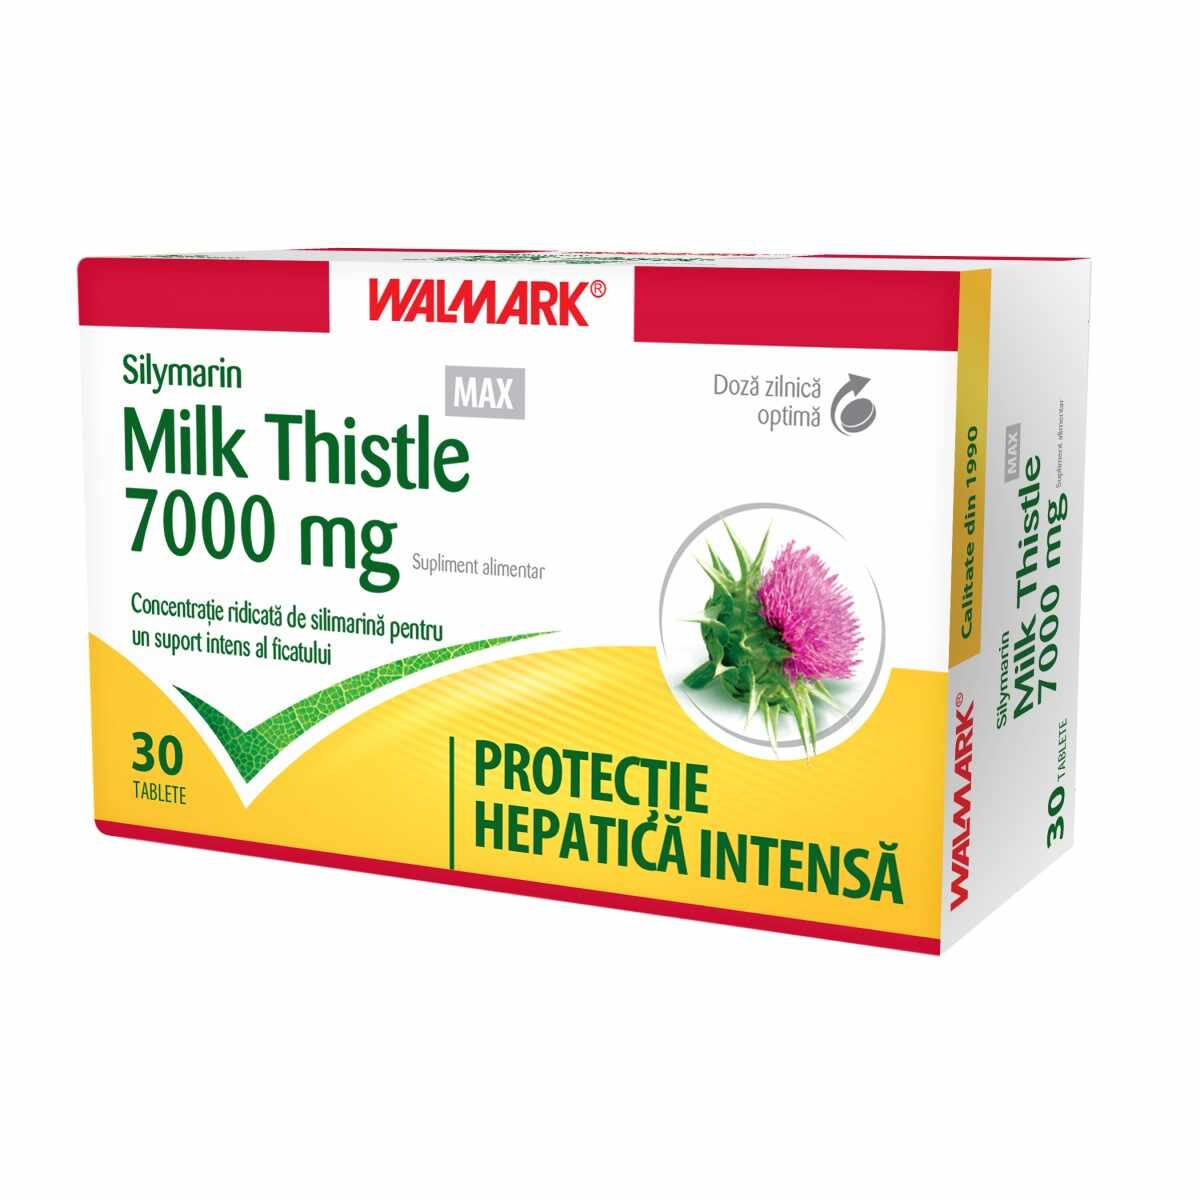 Silymarin Milk Thistle MAX, 30 comprimate filmate, Walmark